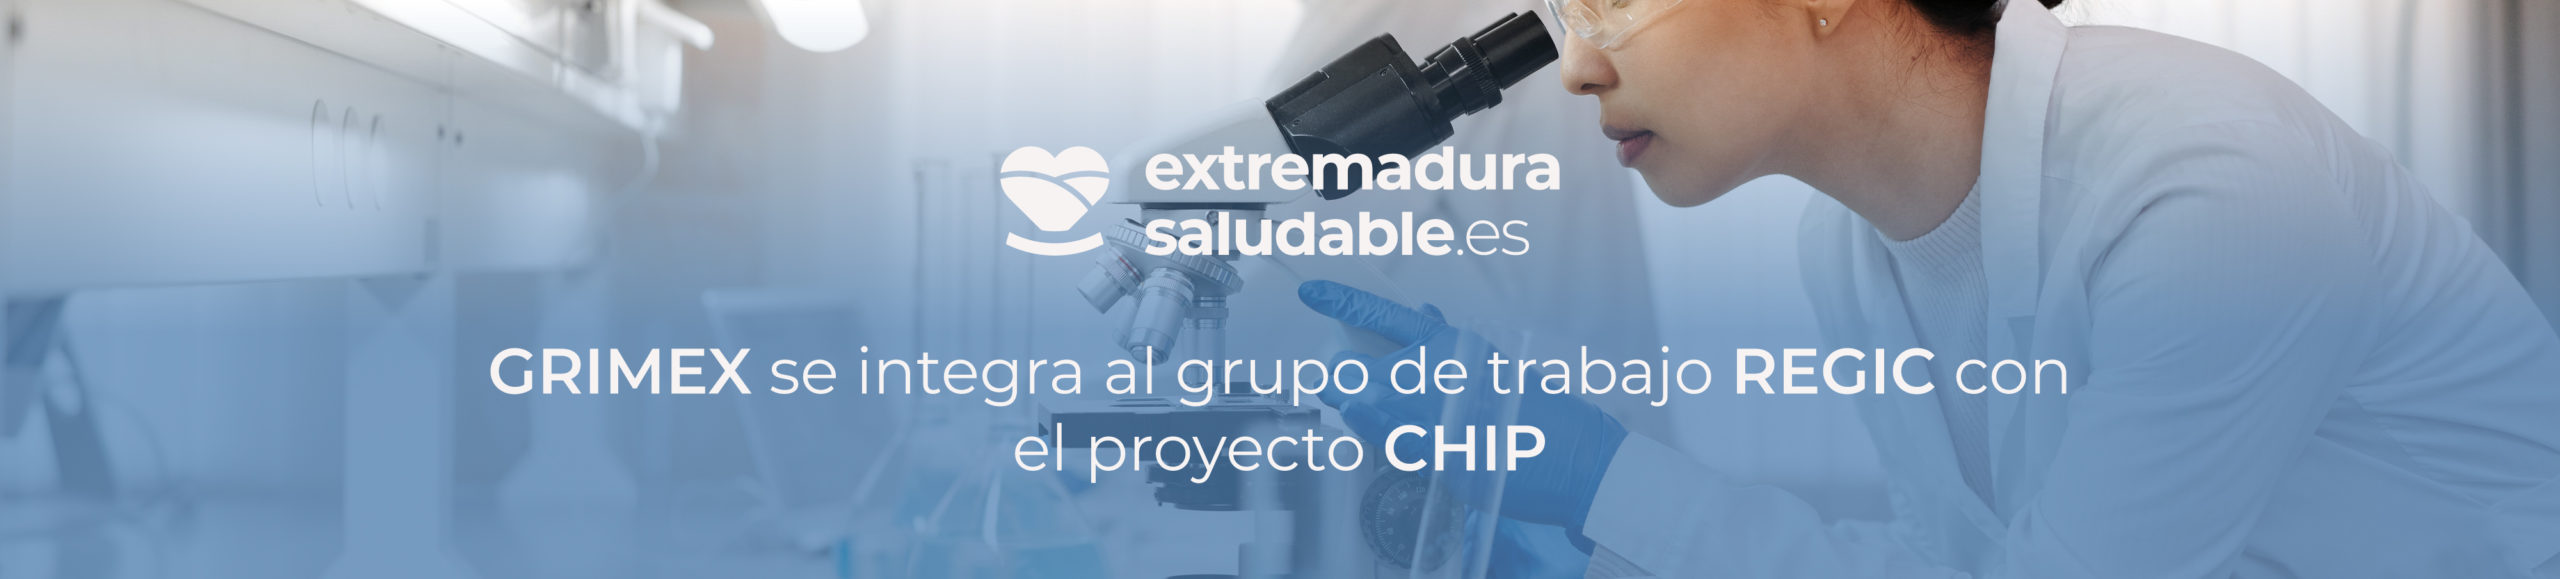 CHIP - Extremadura Saludable